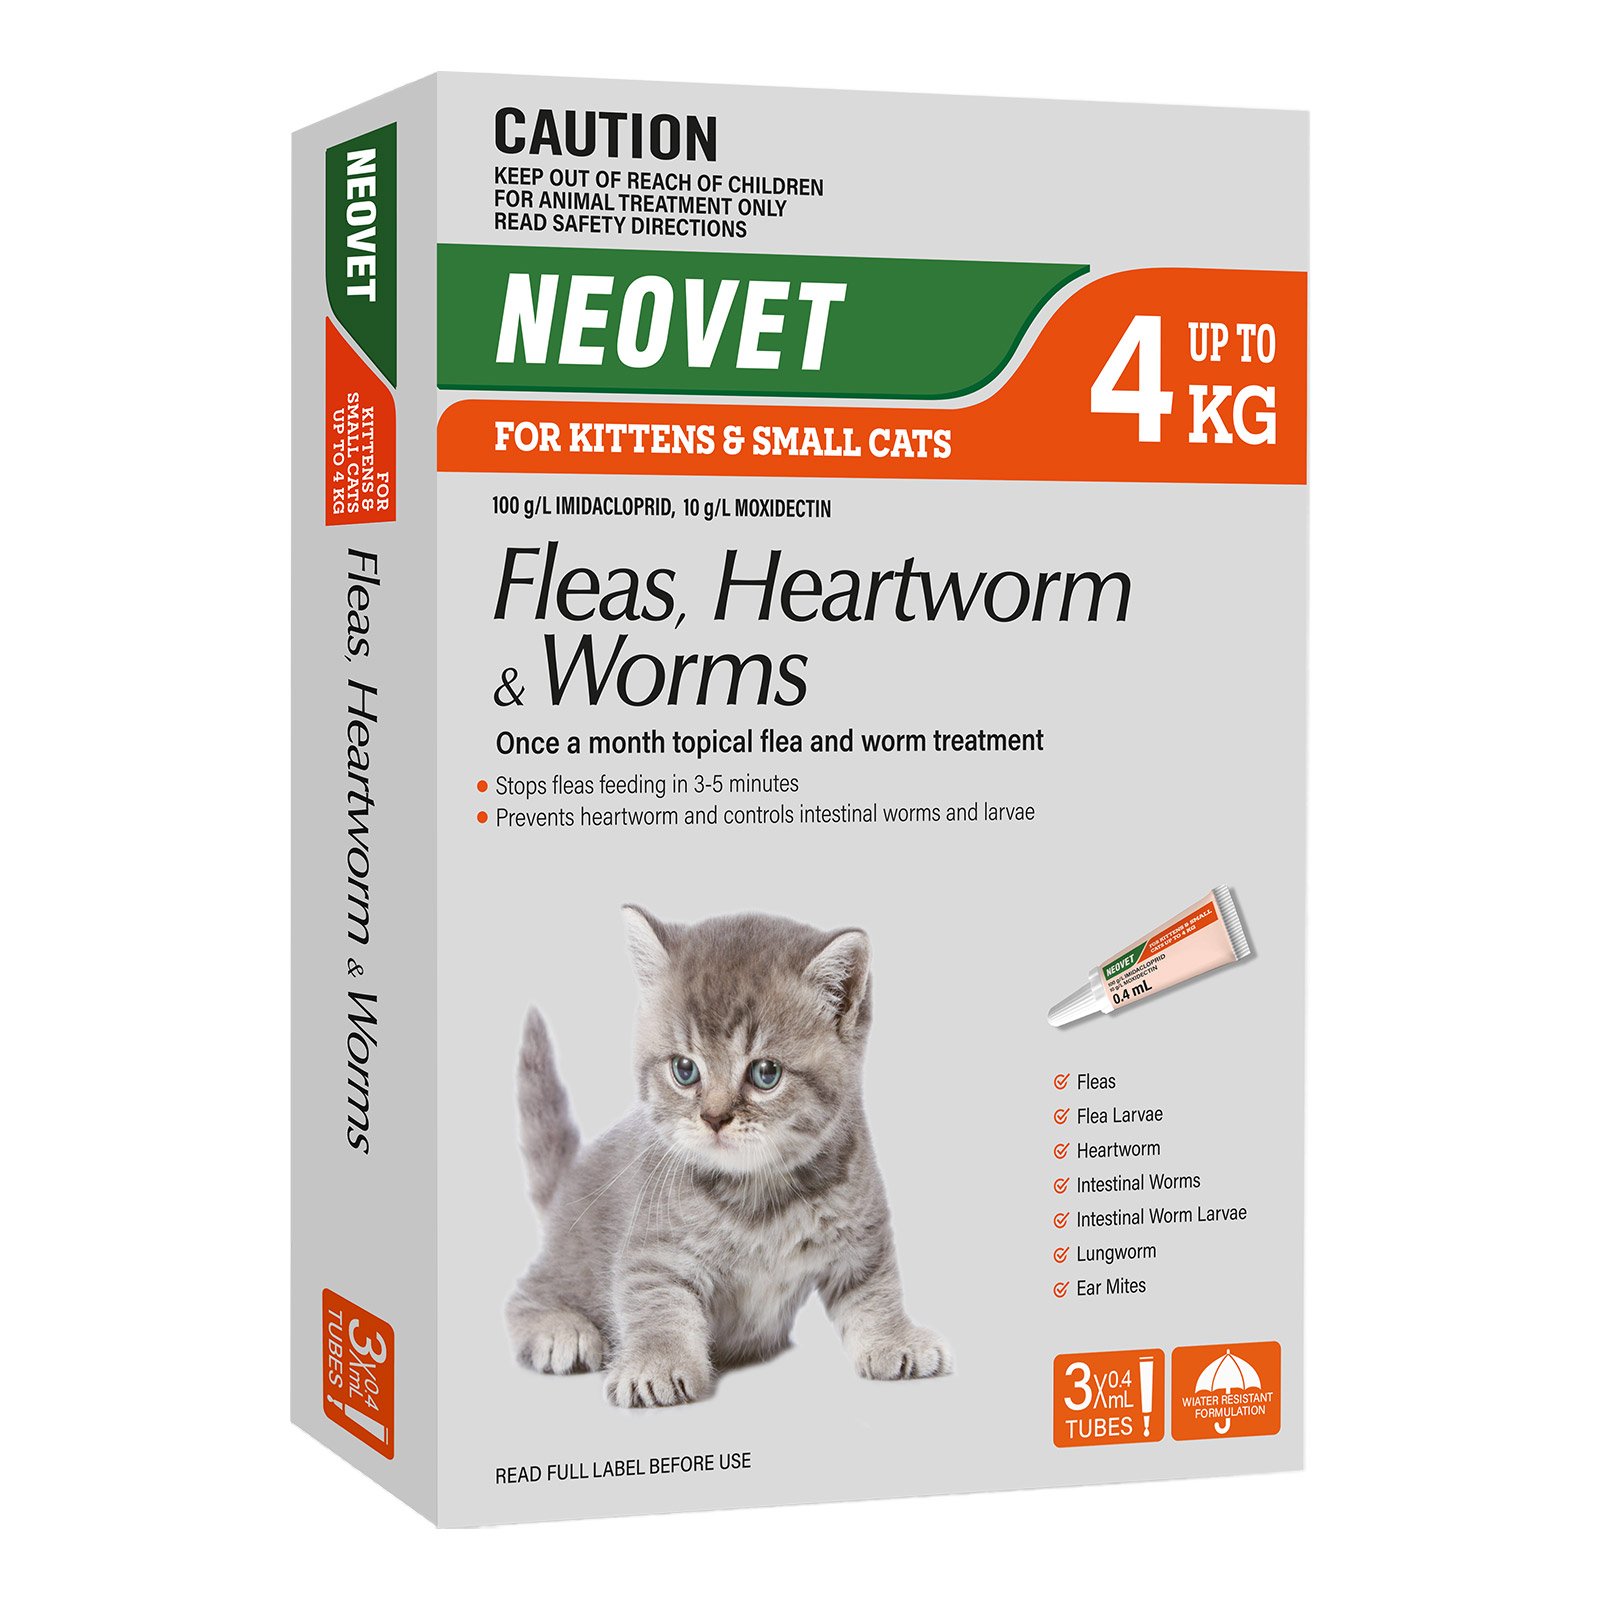 Neovet Spot-On for Cat Supplies